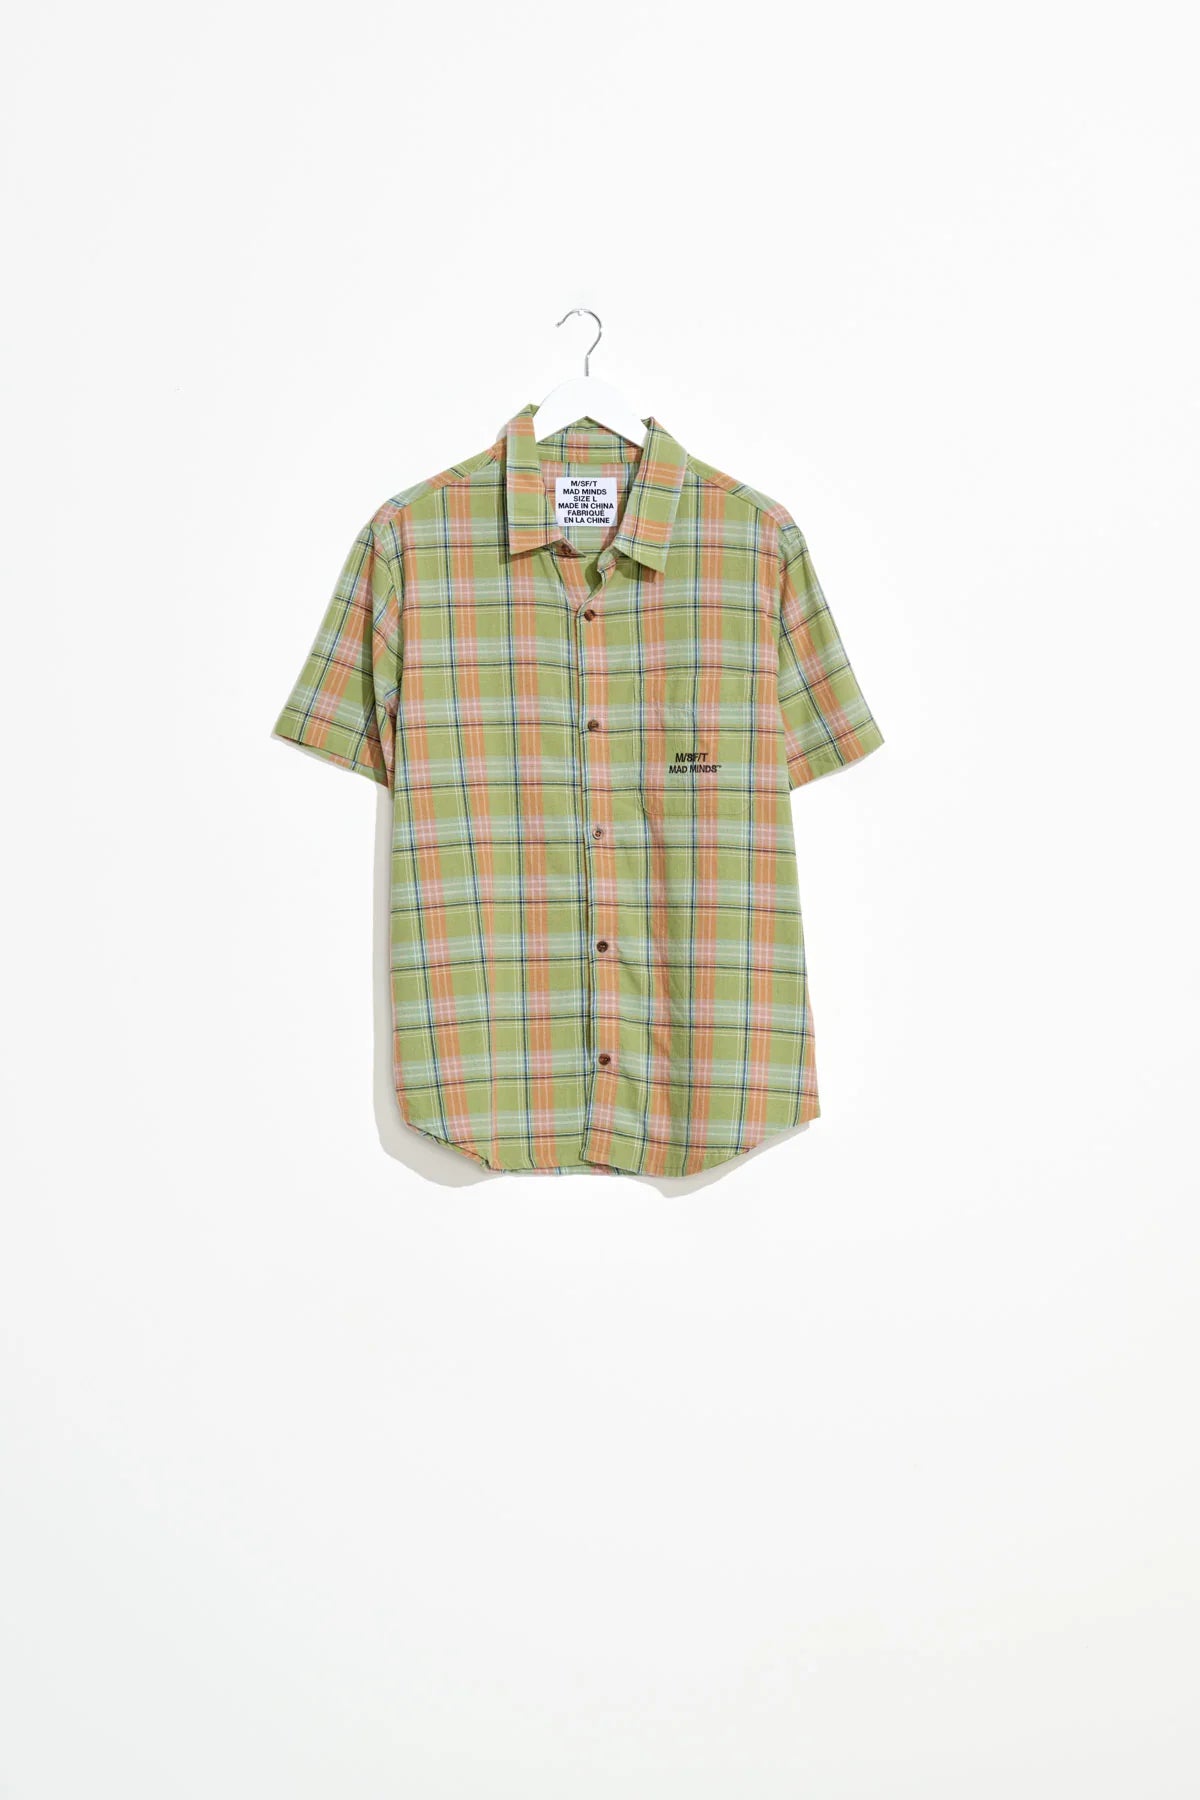 MISFIT // Darling Quartz SS Shirt GREEN